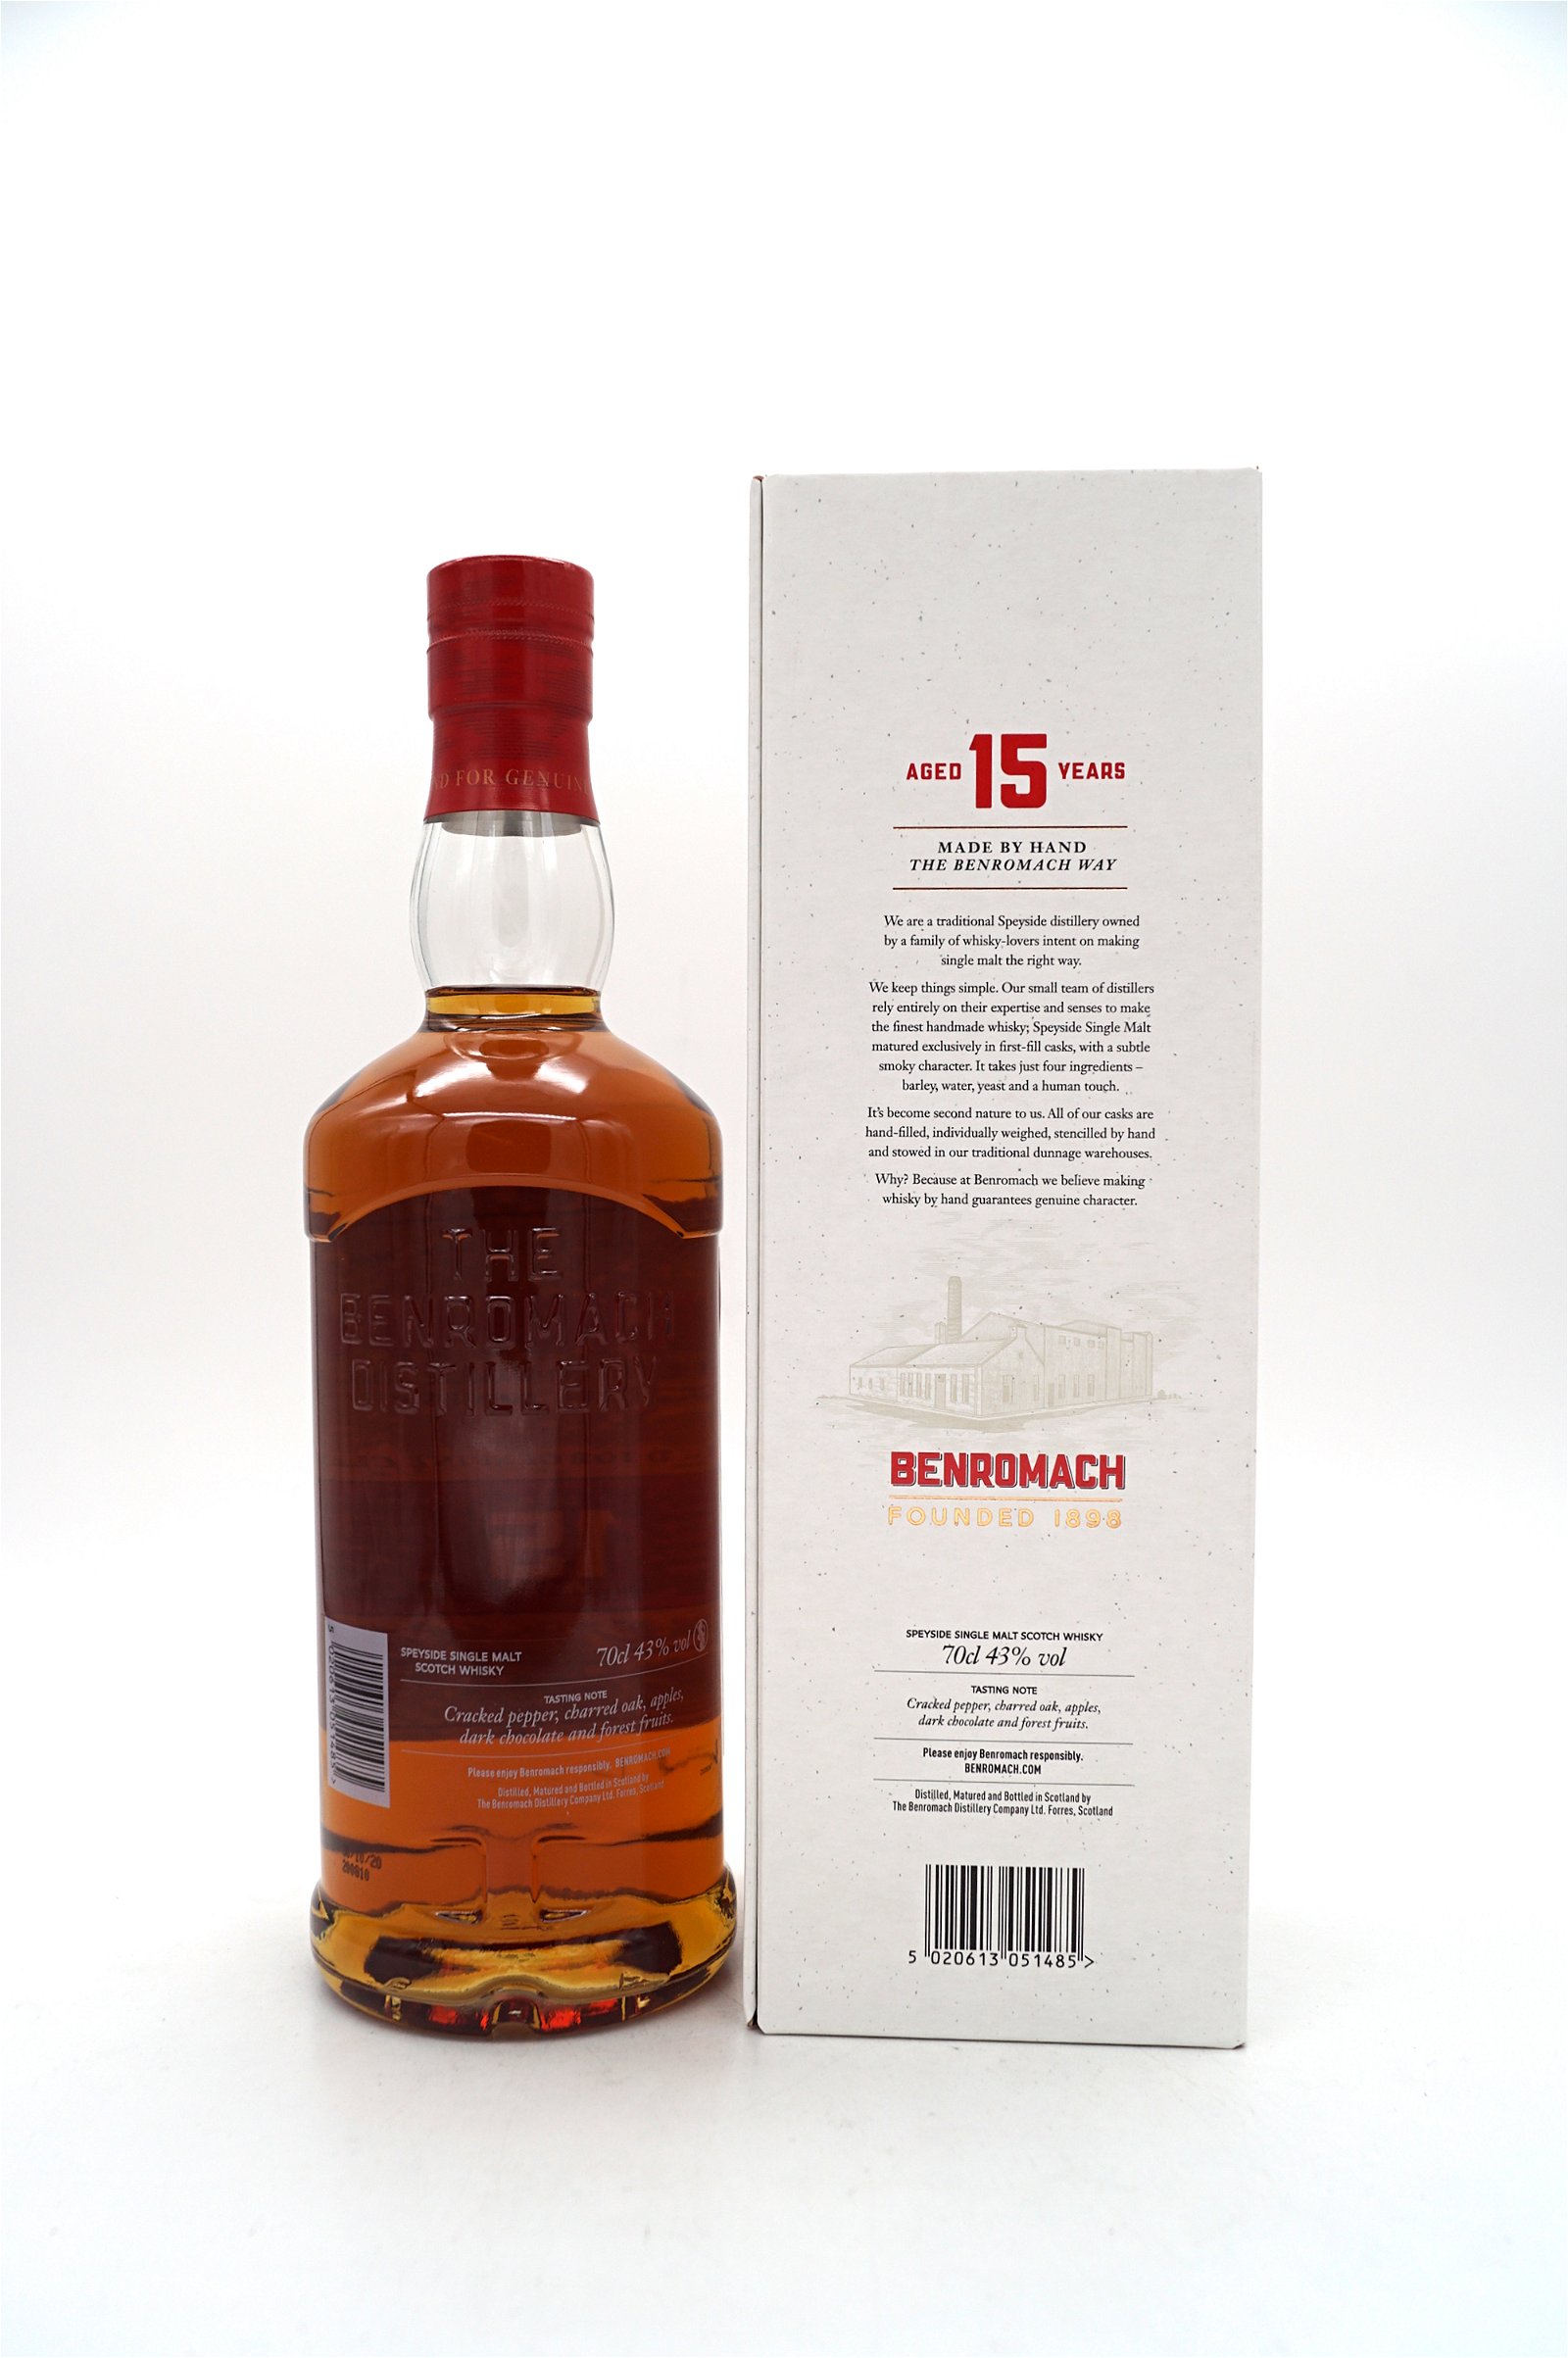 Benromach 15 Jahre Speyside Single Malt Scotch Whisky